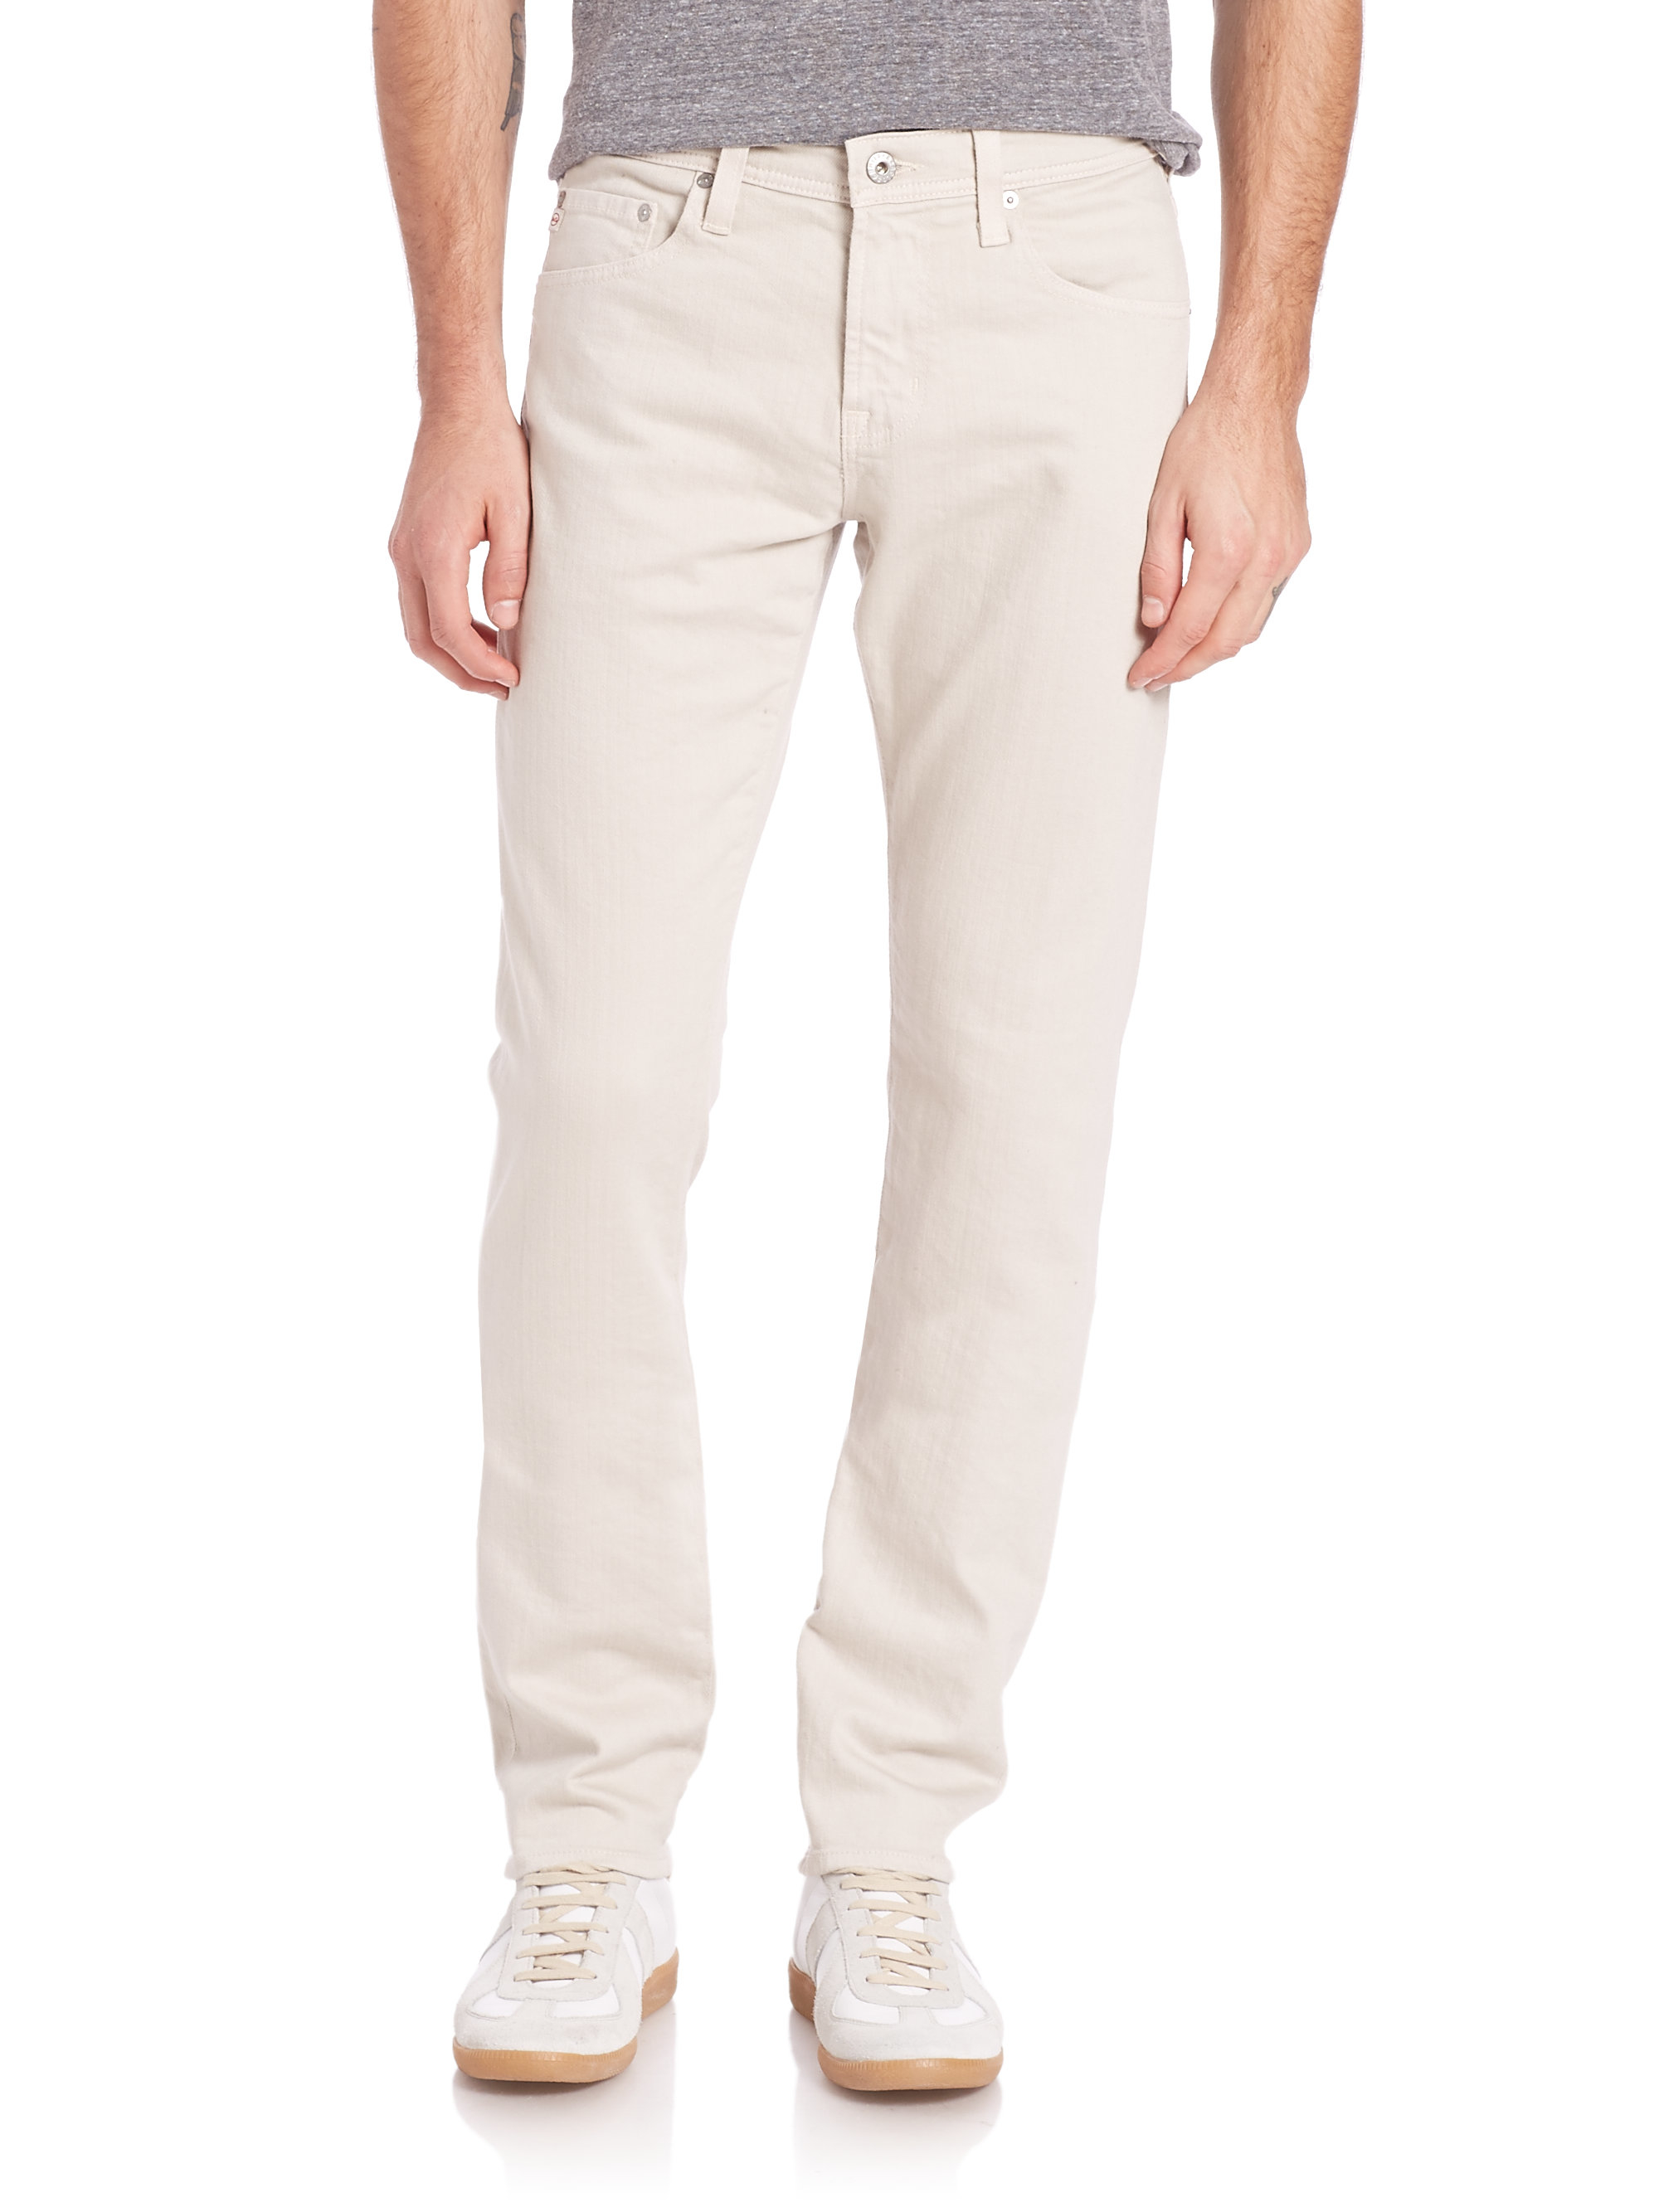 Ag jeans Nomad Skinny Jeans in White for Men | Lyst